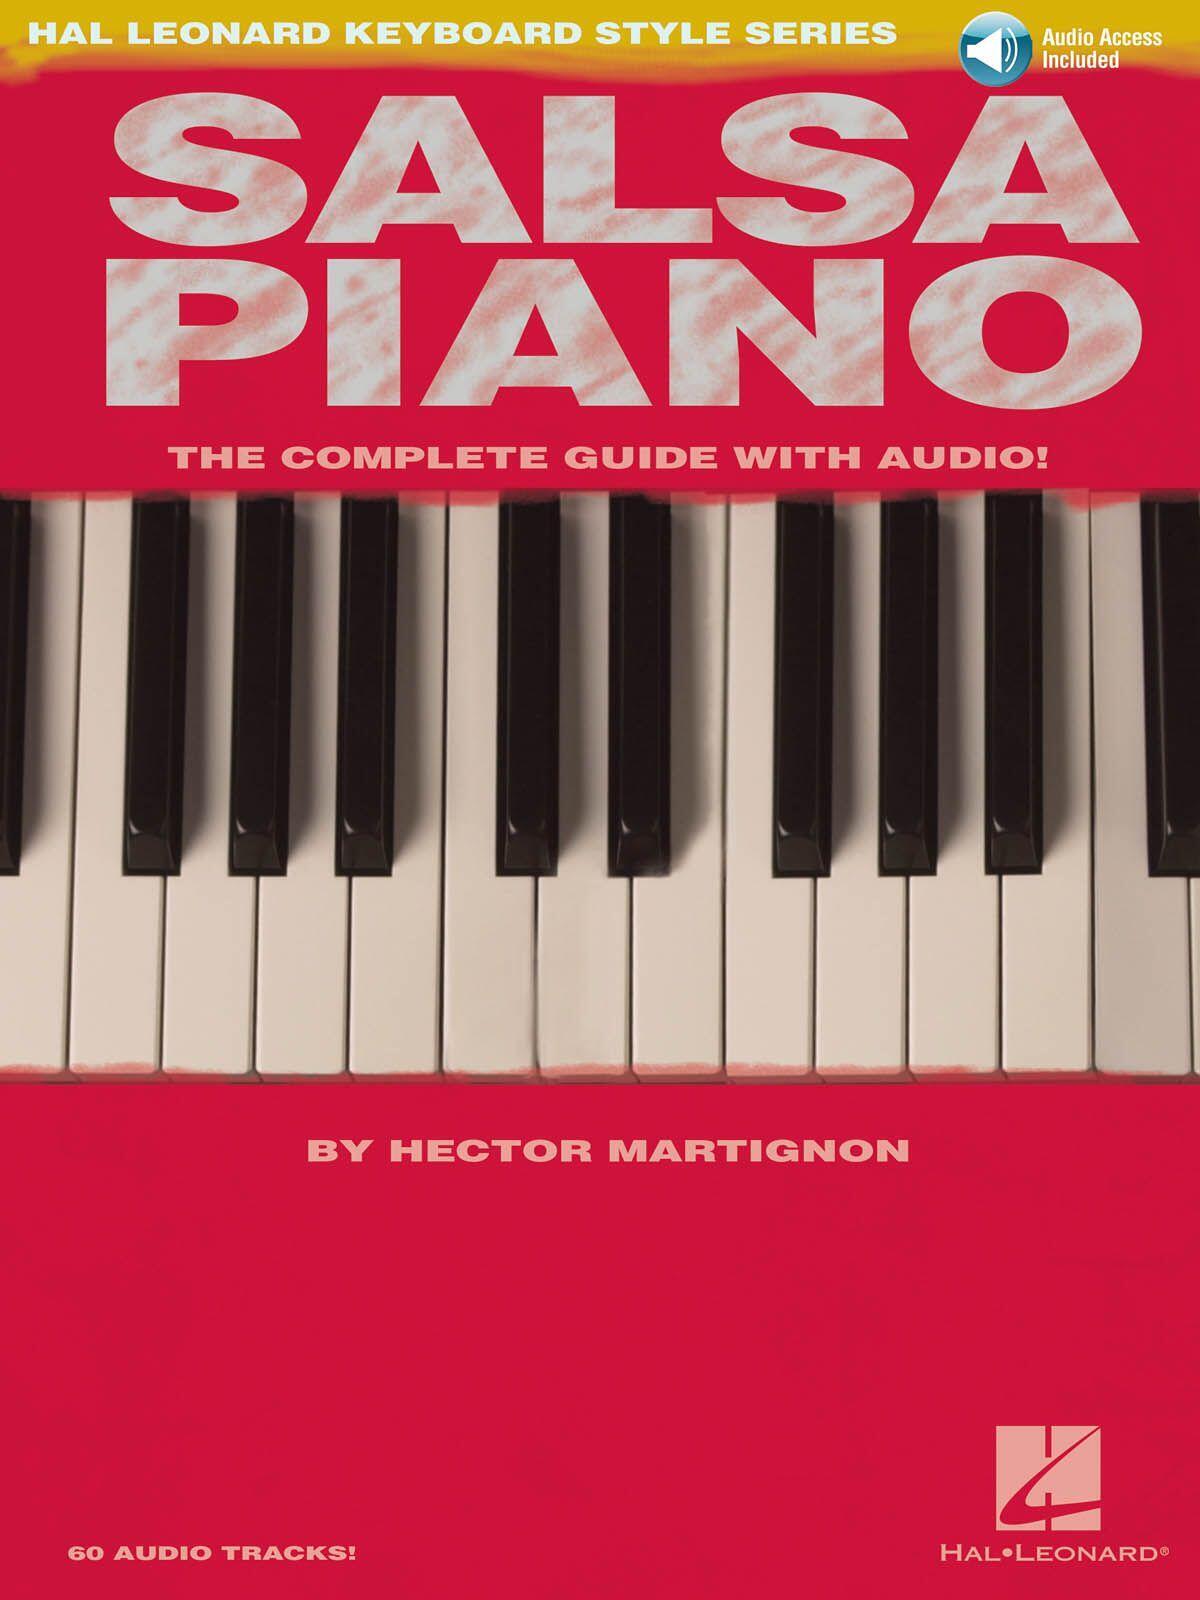 Hal Leonard Piano Salsa (F) Méthode complète Hector Martignon  Klavier Buch  DHP 1145541 : photo 1